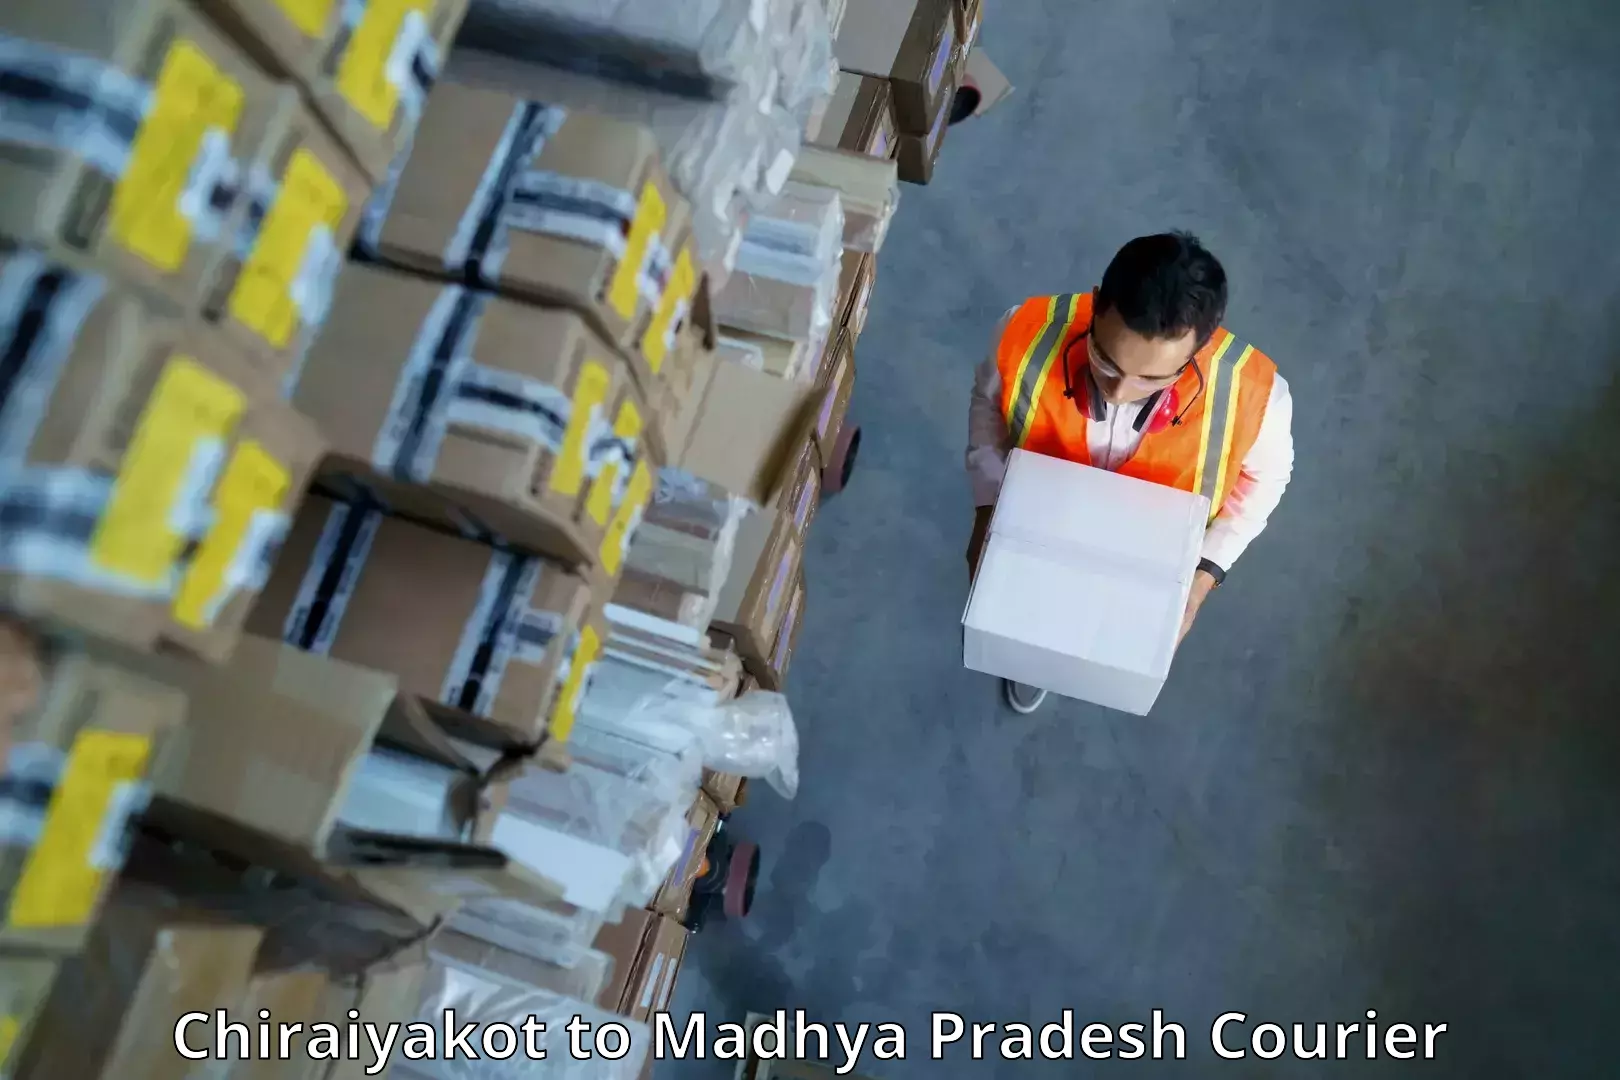 Express delivery capabilities Chiraiyakot to Madhya Pradesh